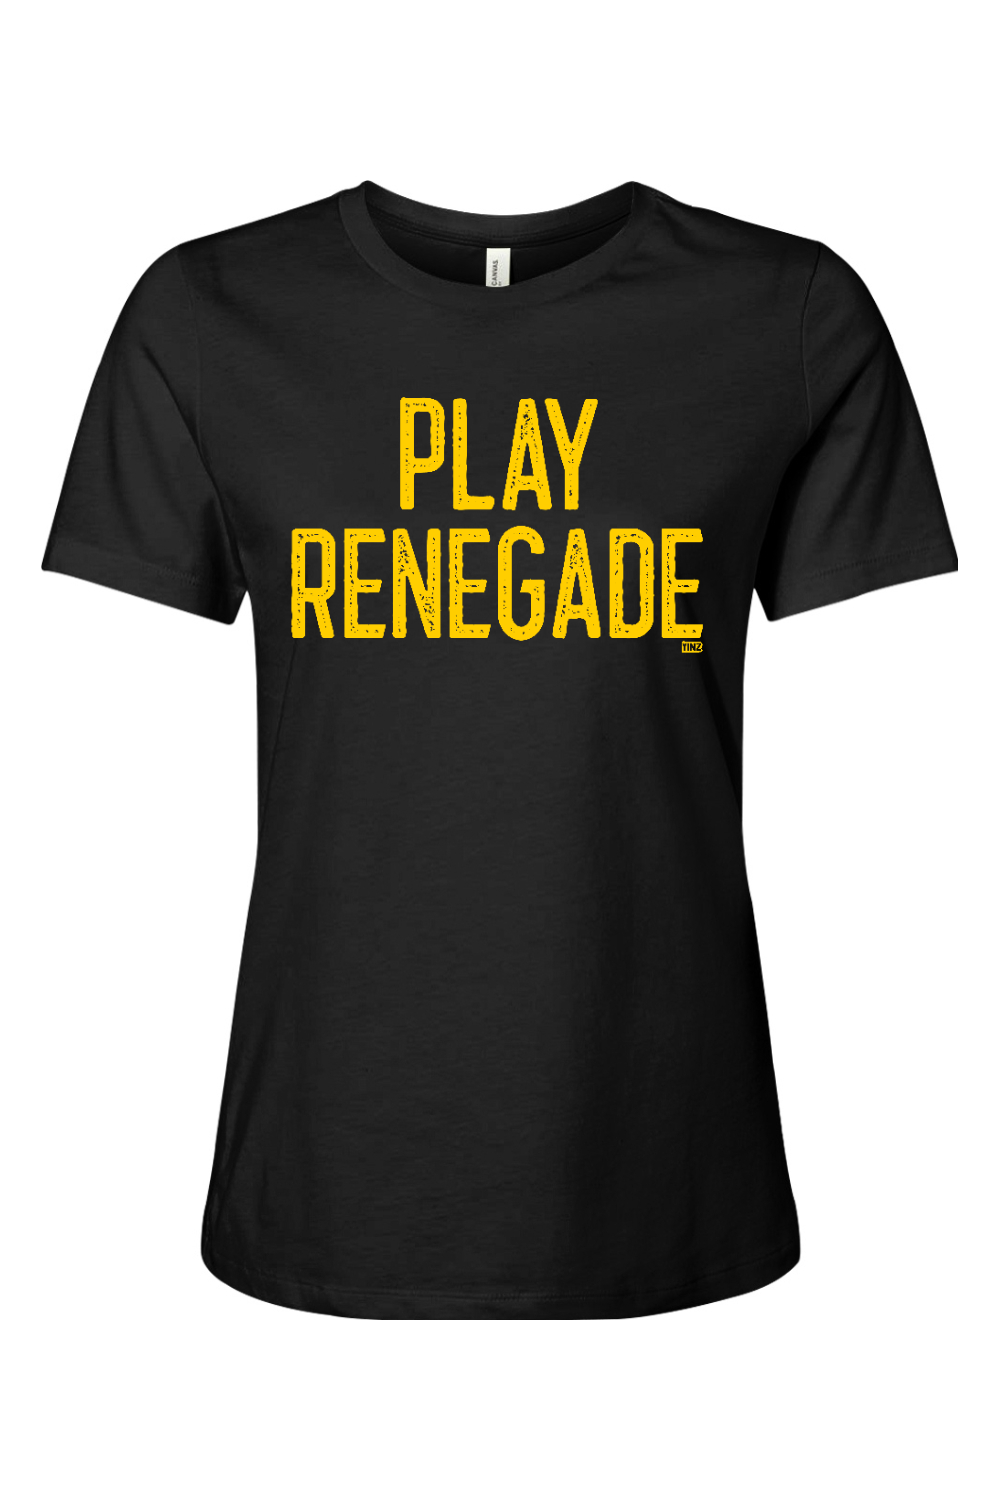 Play Renegade - Ladies Tee - Yinzylvania